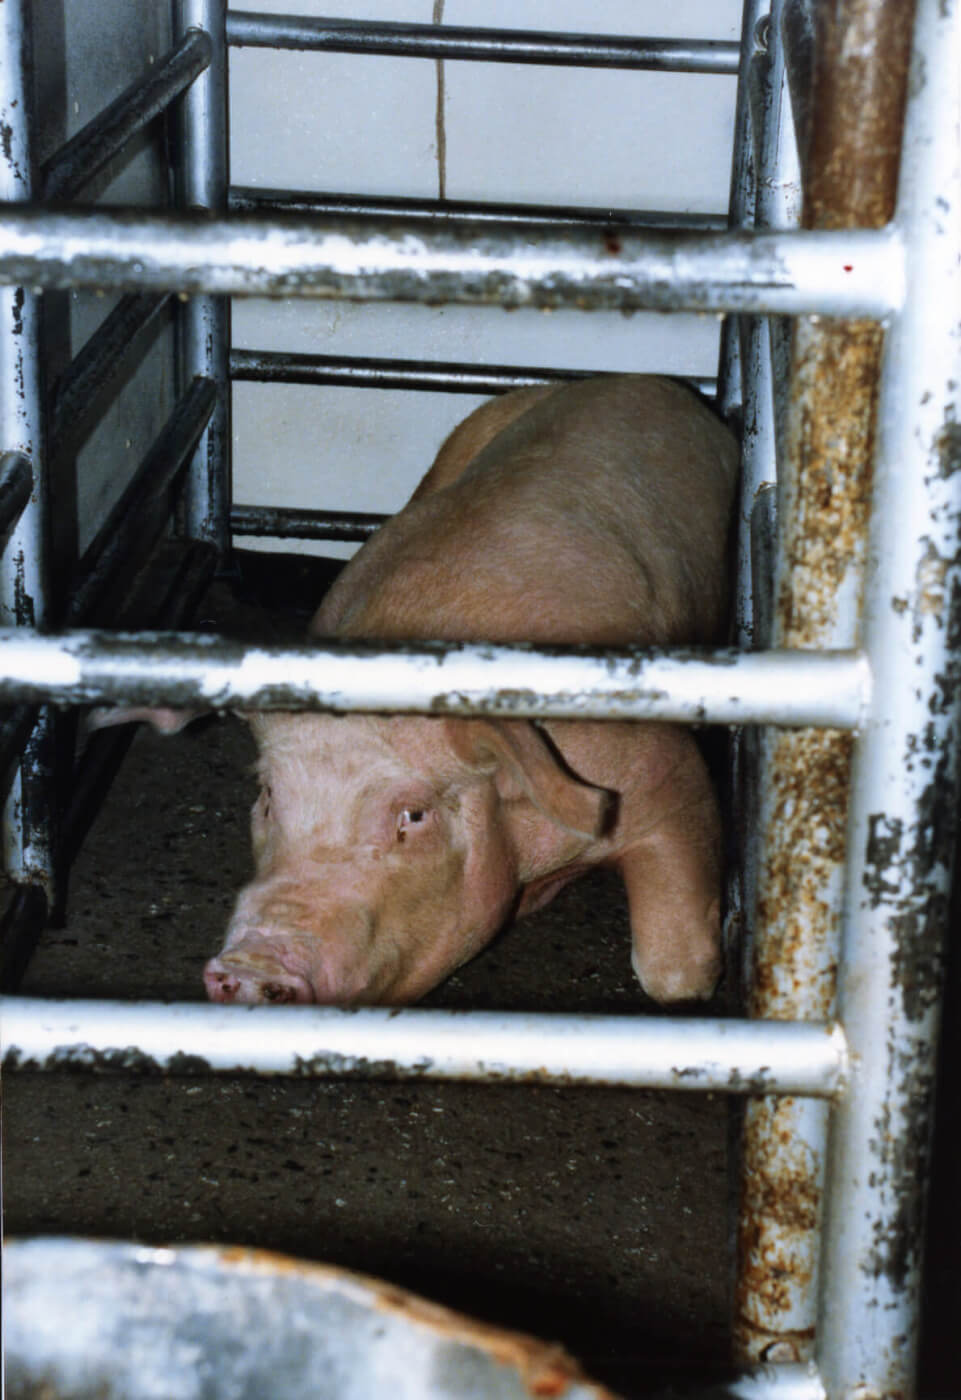 Top 10 Reasons Not to Eat Pigs | PETA